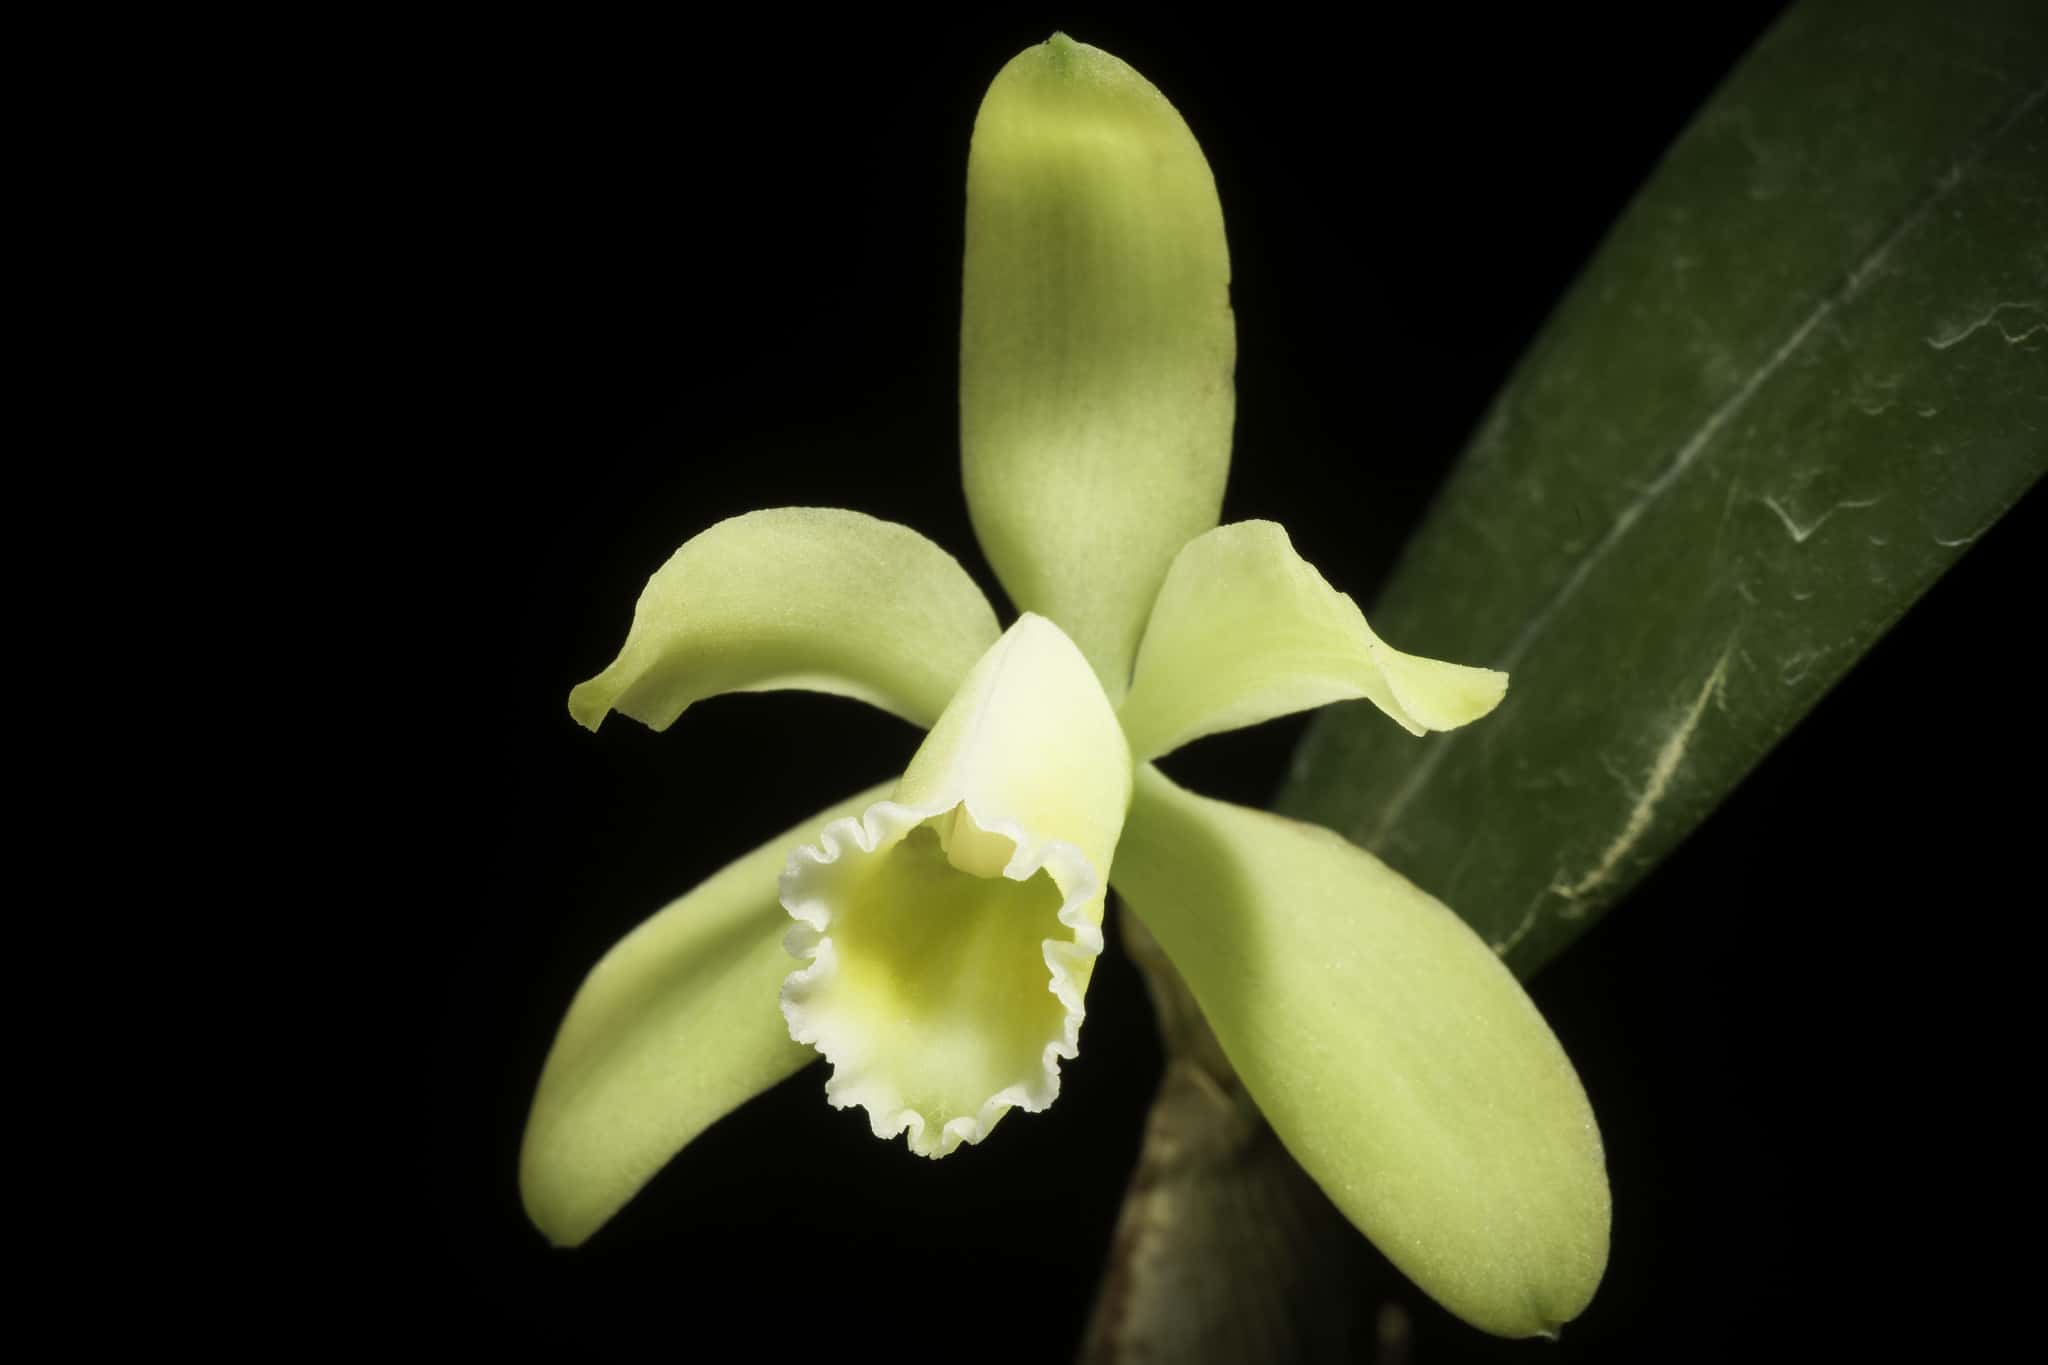 Cattleya luteola orchid